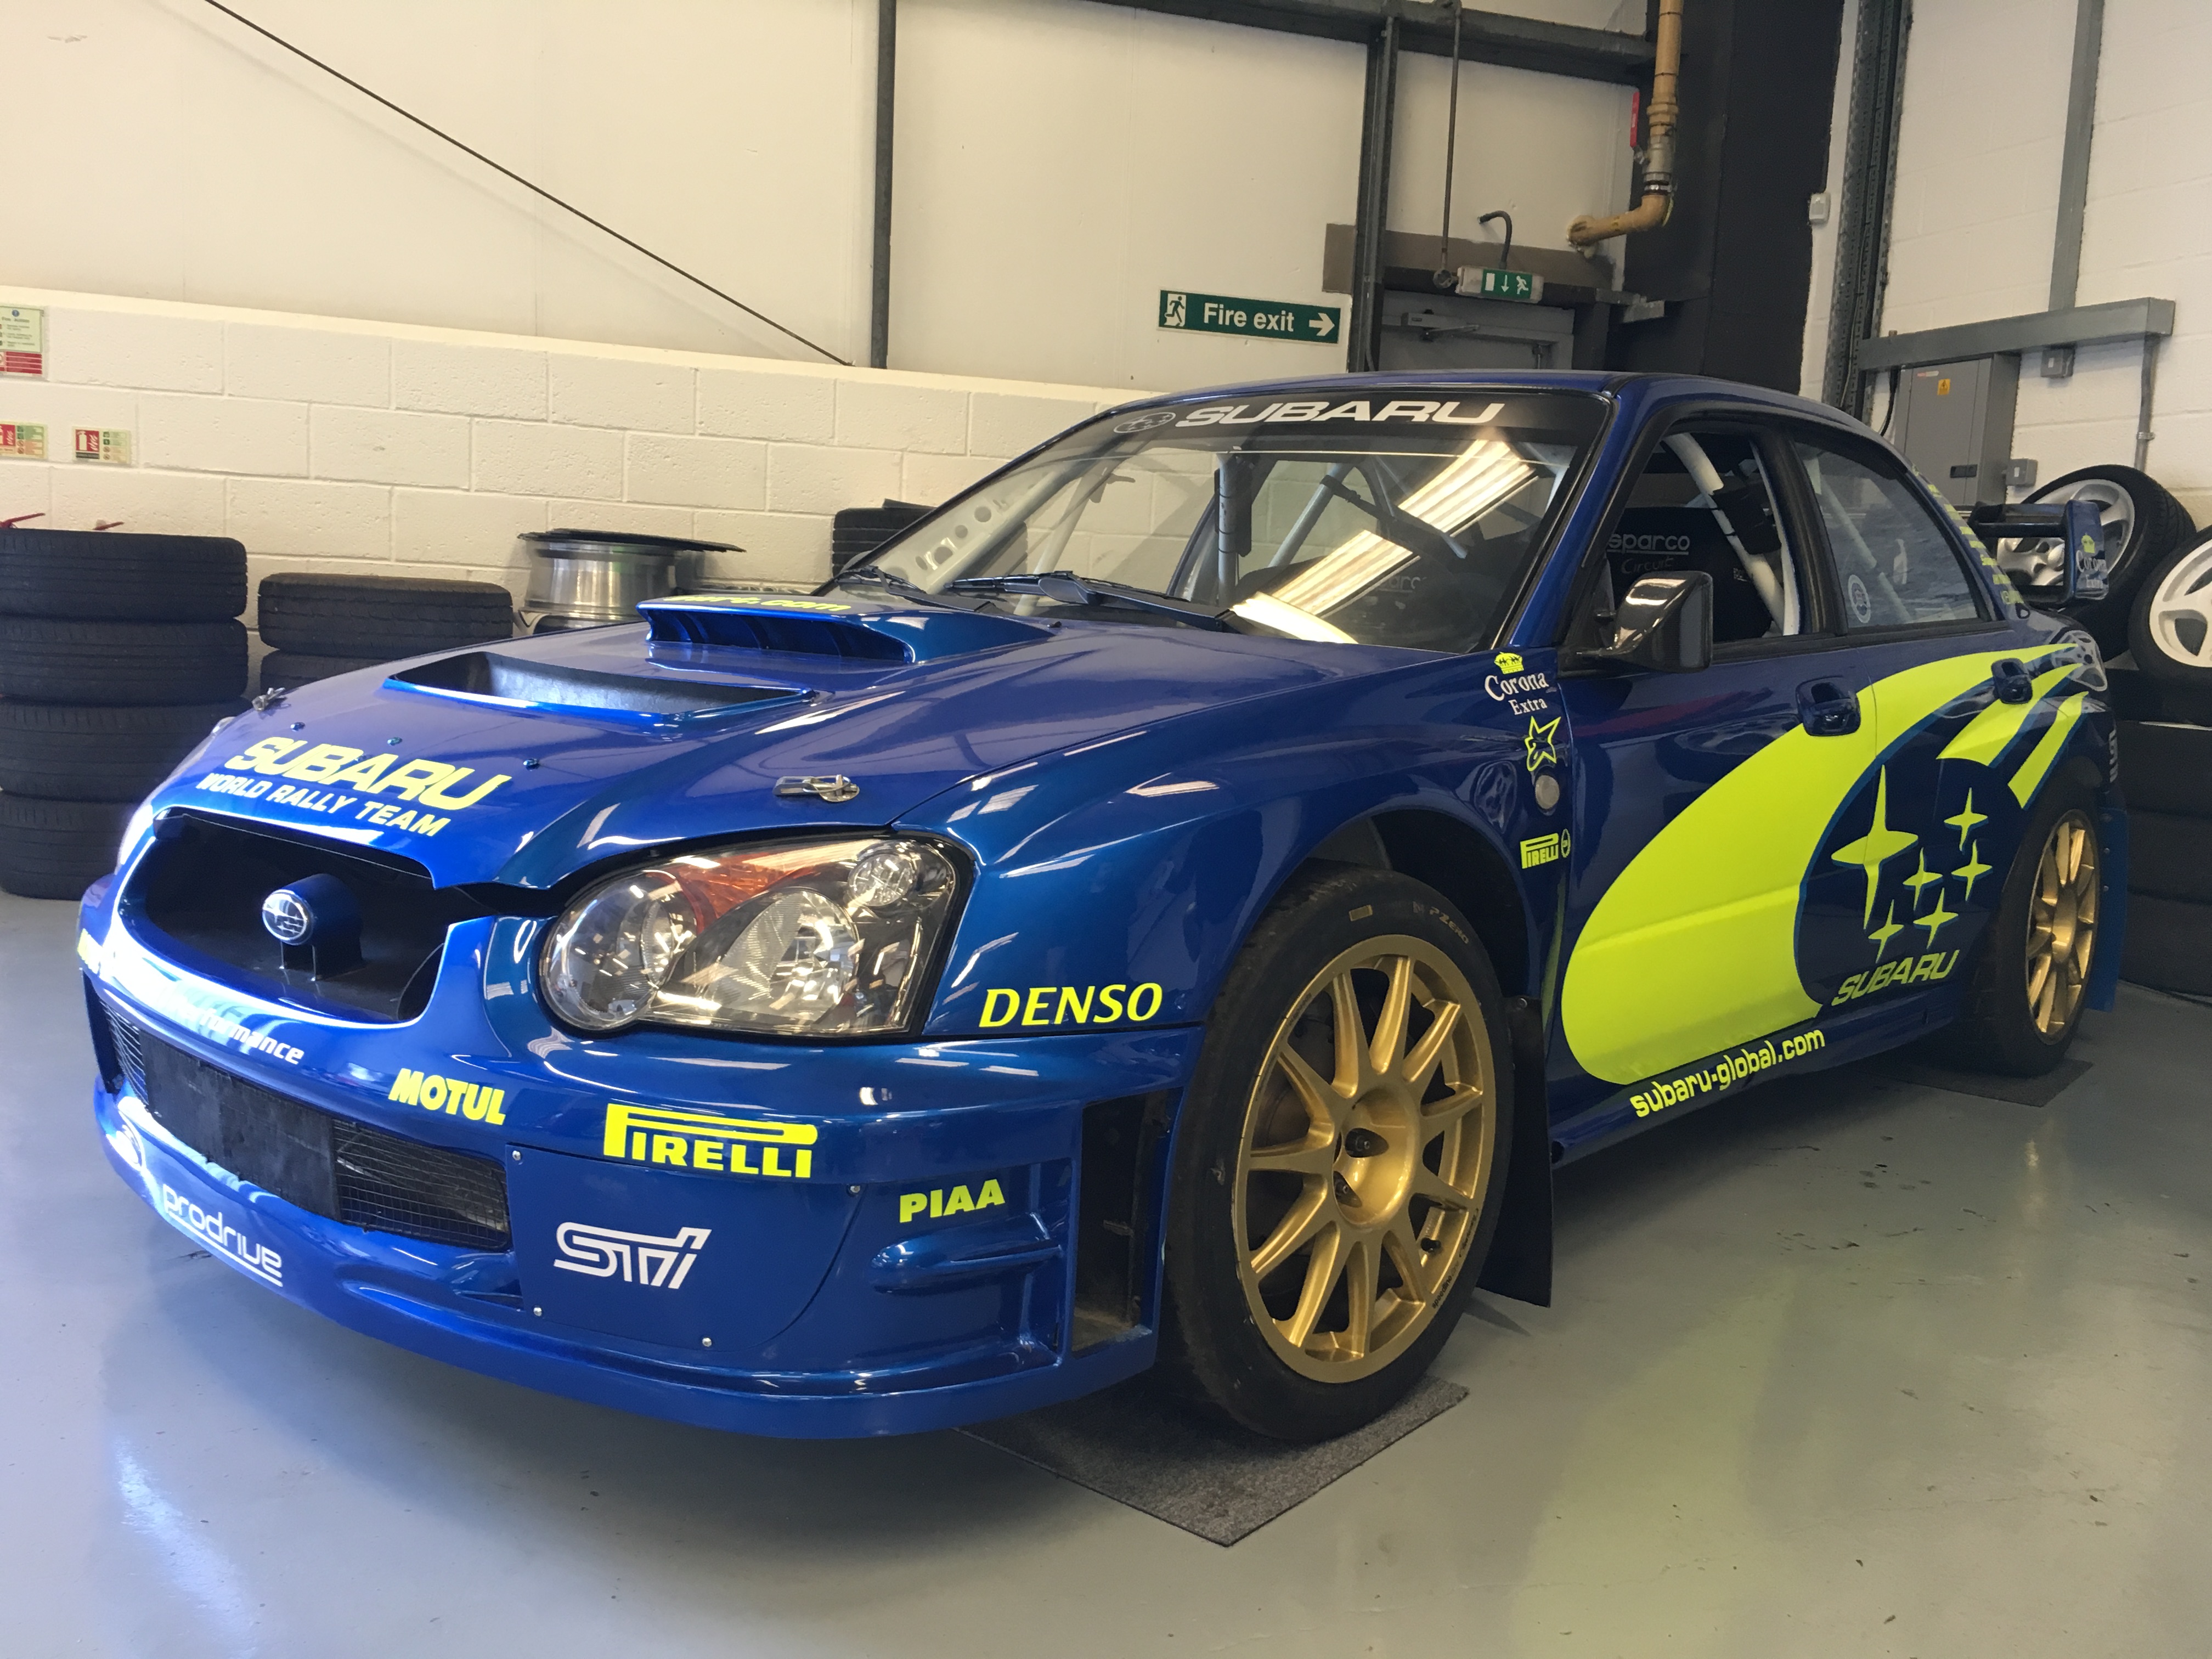 Subaru WRC for sale... A Pension Alternative